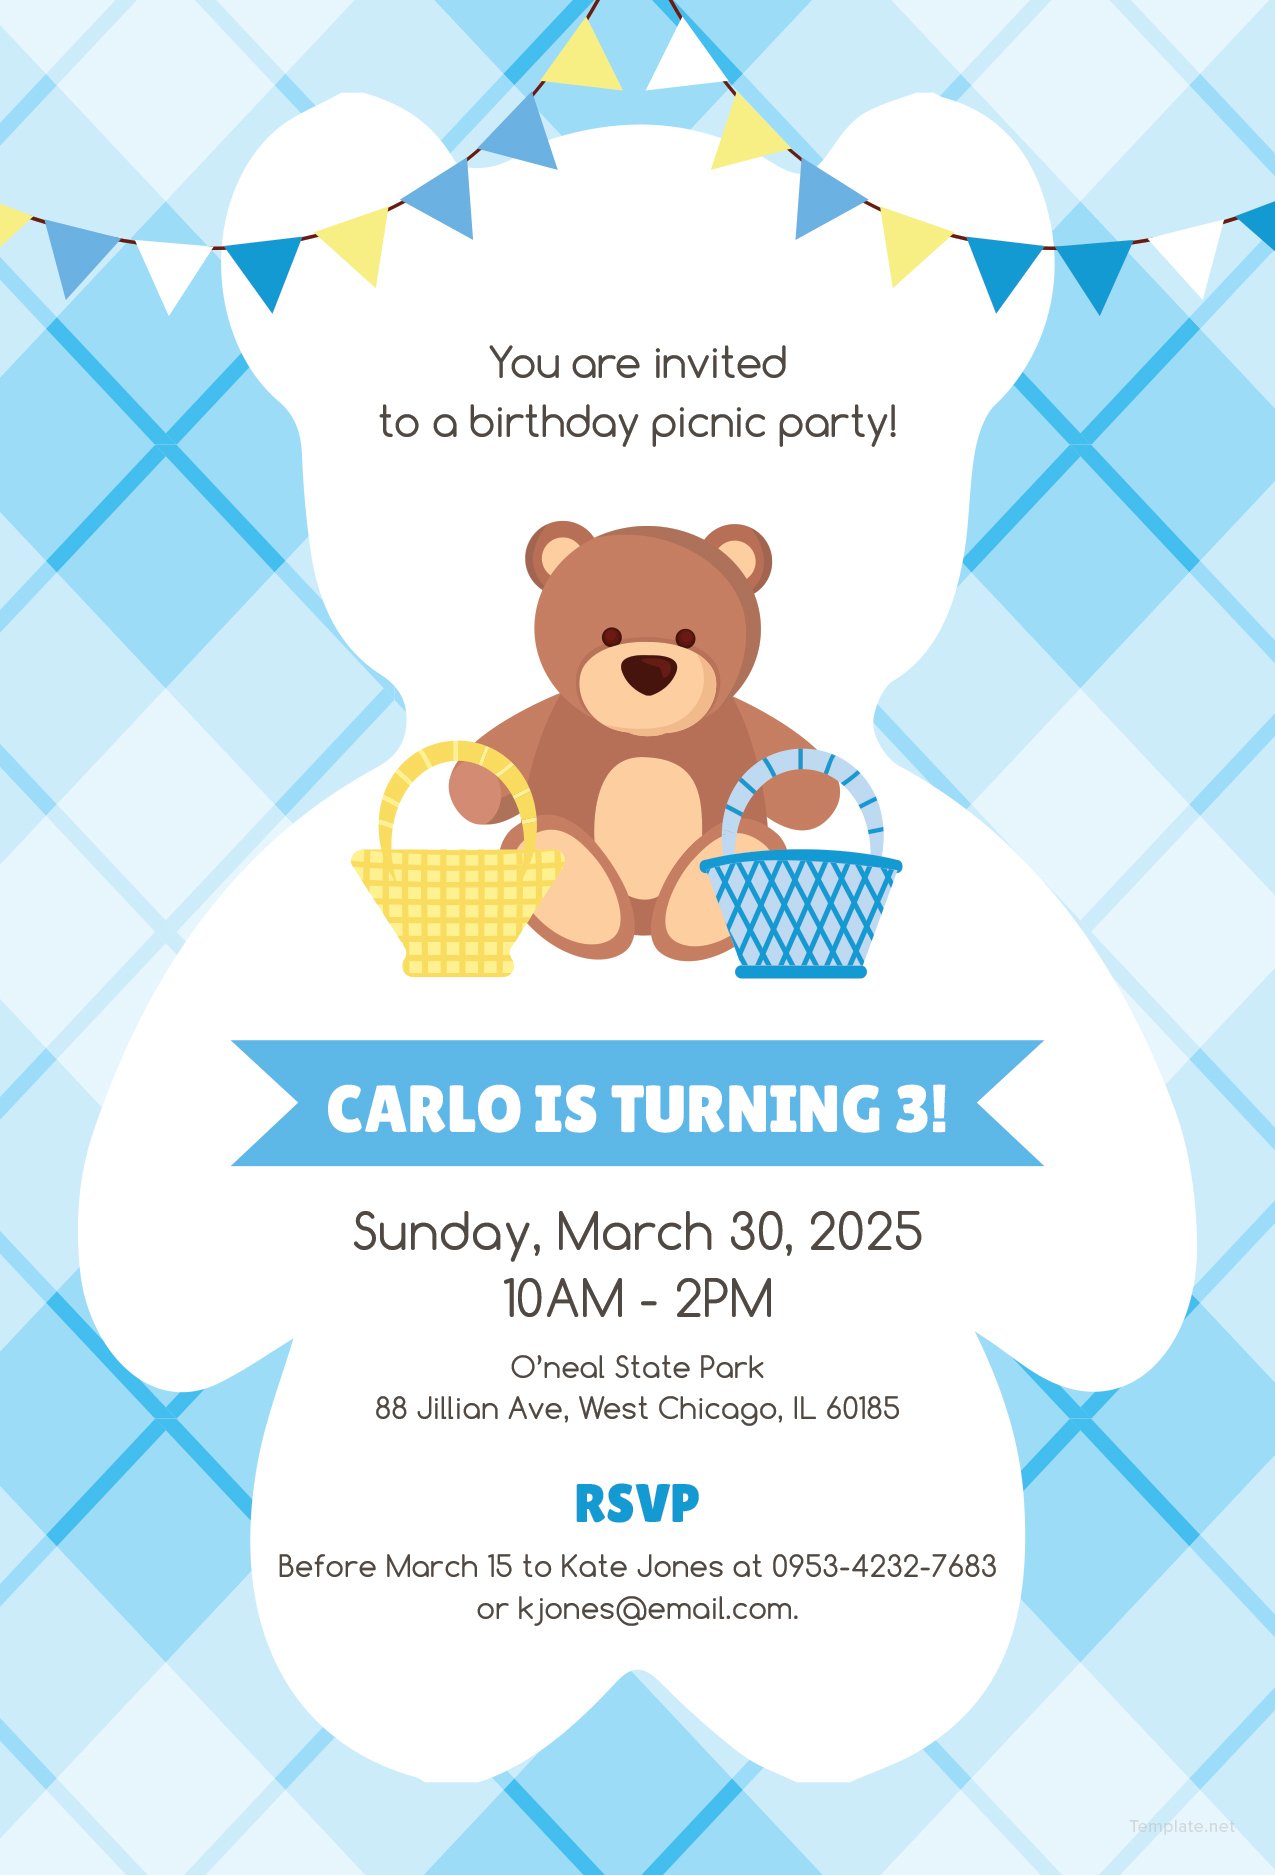 Free Teddy Bear Picnic Birthday Invitation Template in Adobe